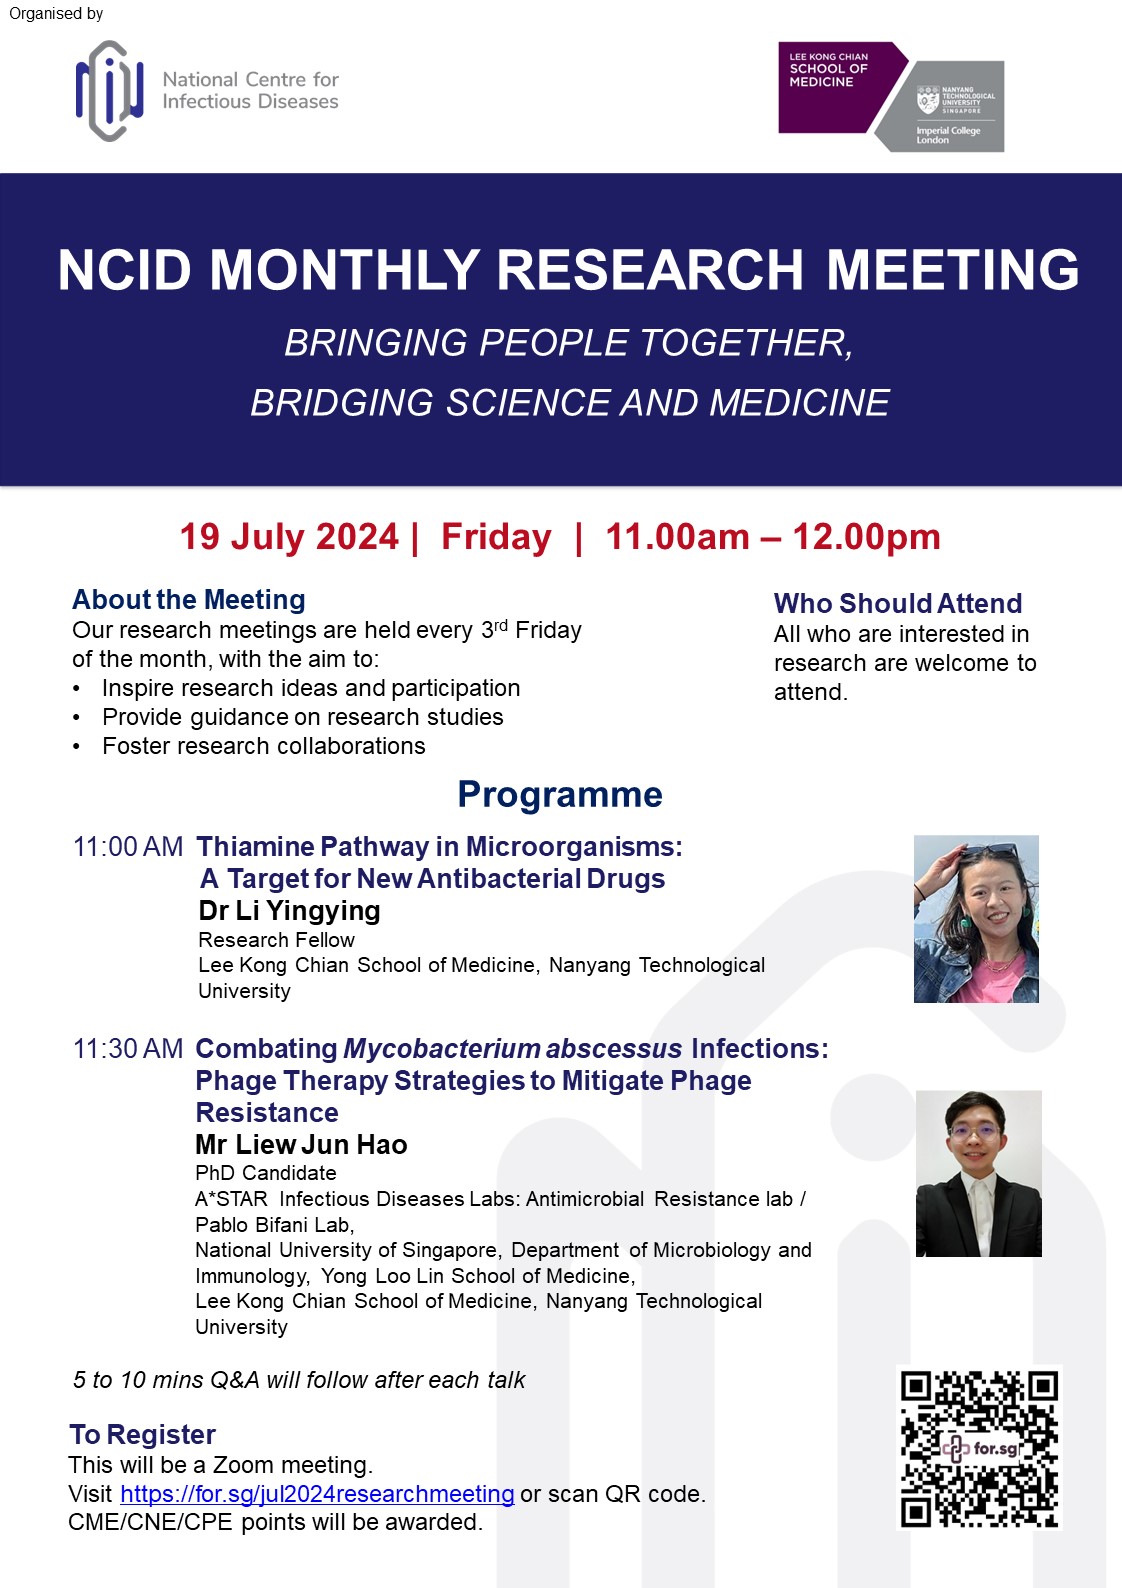 NCID Research Meeting Publicity Poster_Jul 2024_pg1.JPG